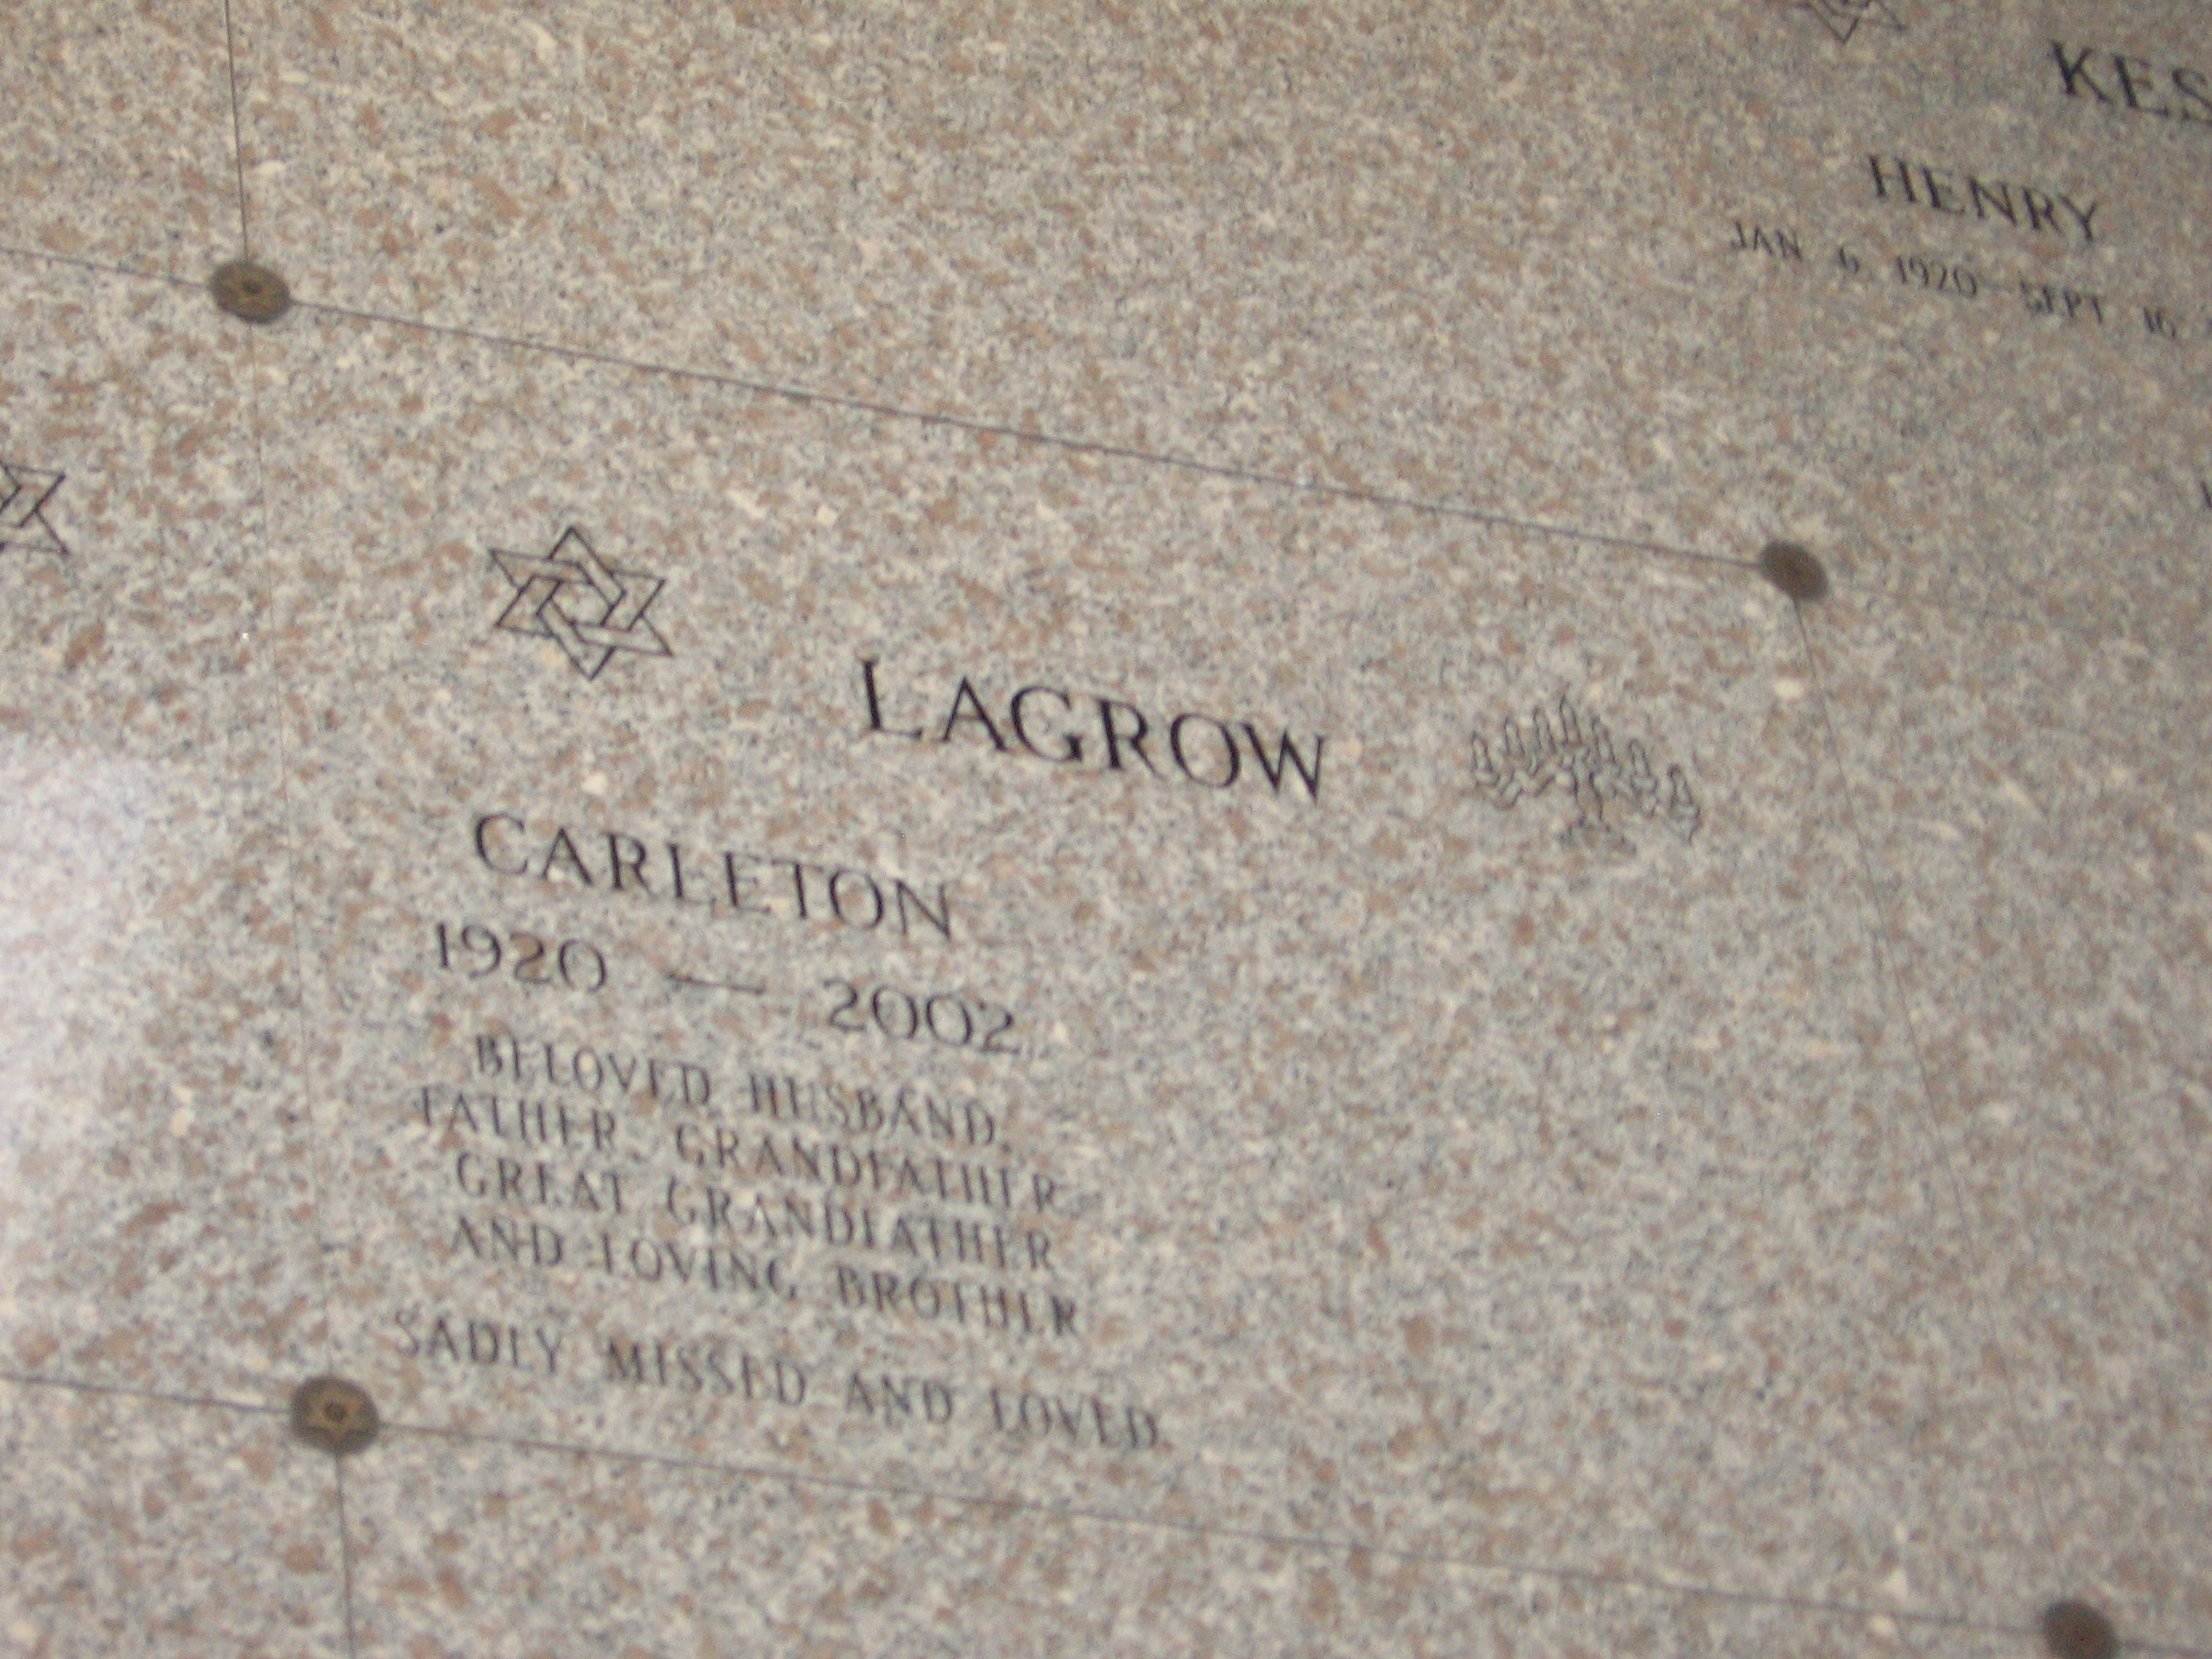 Carleton Lagrow